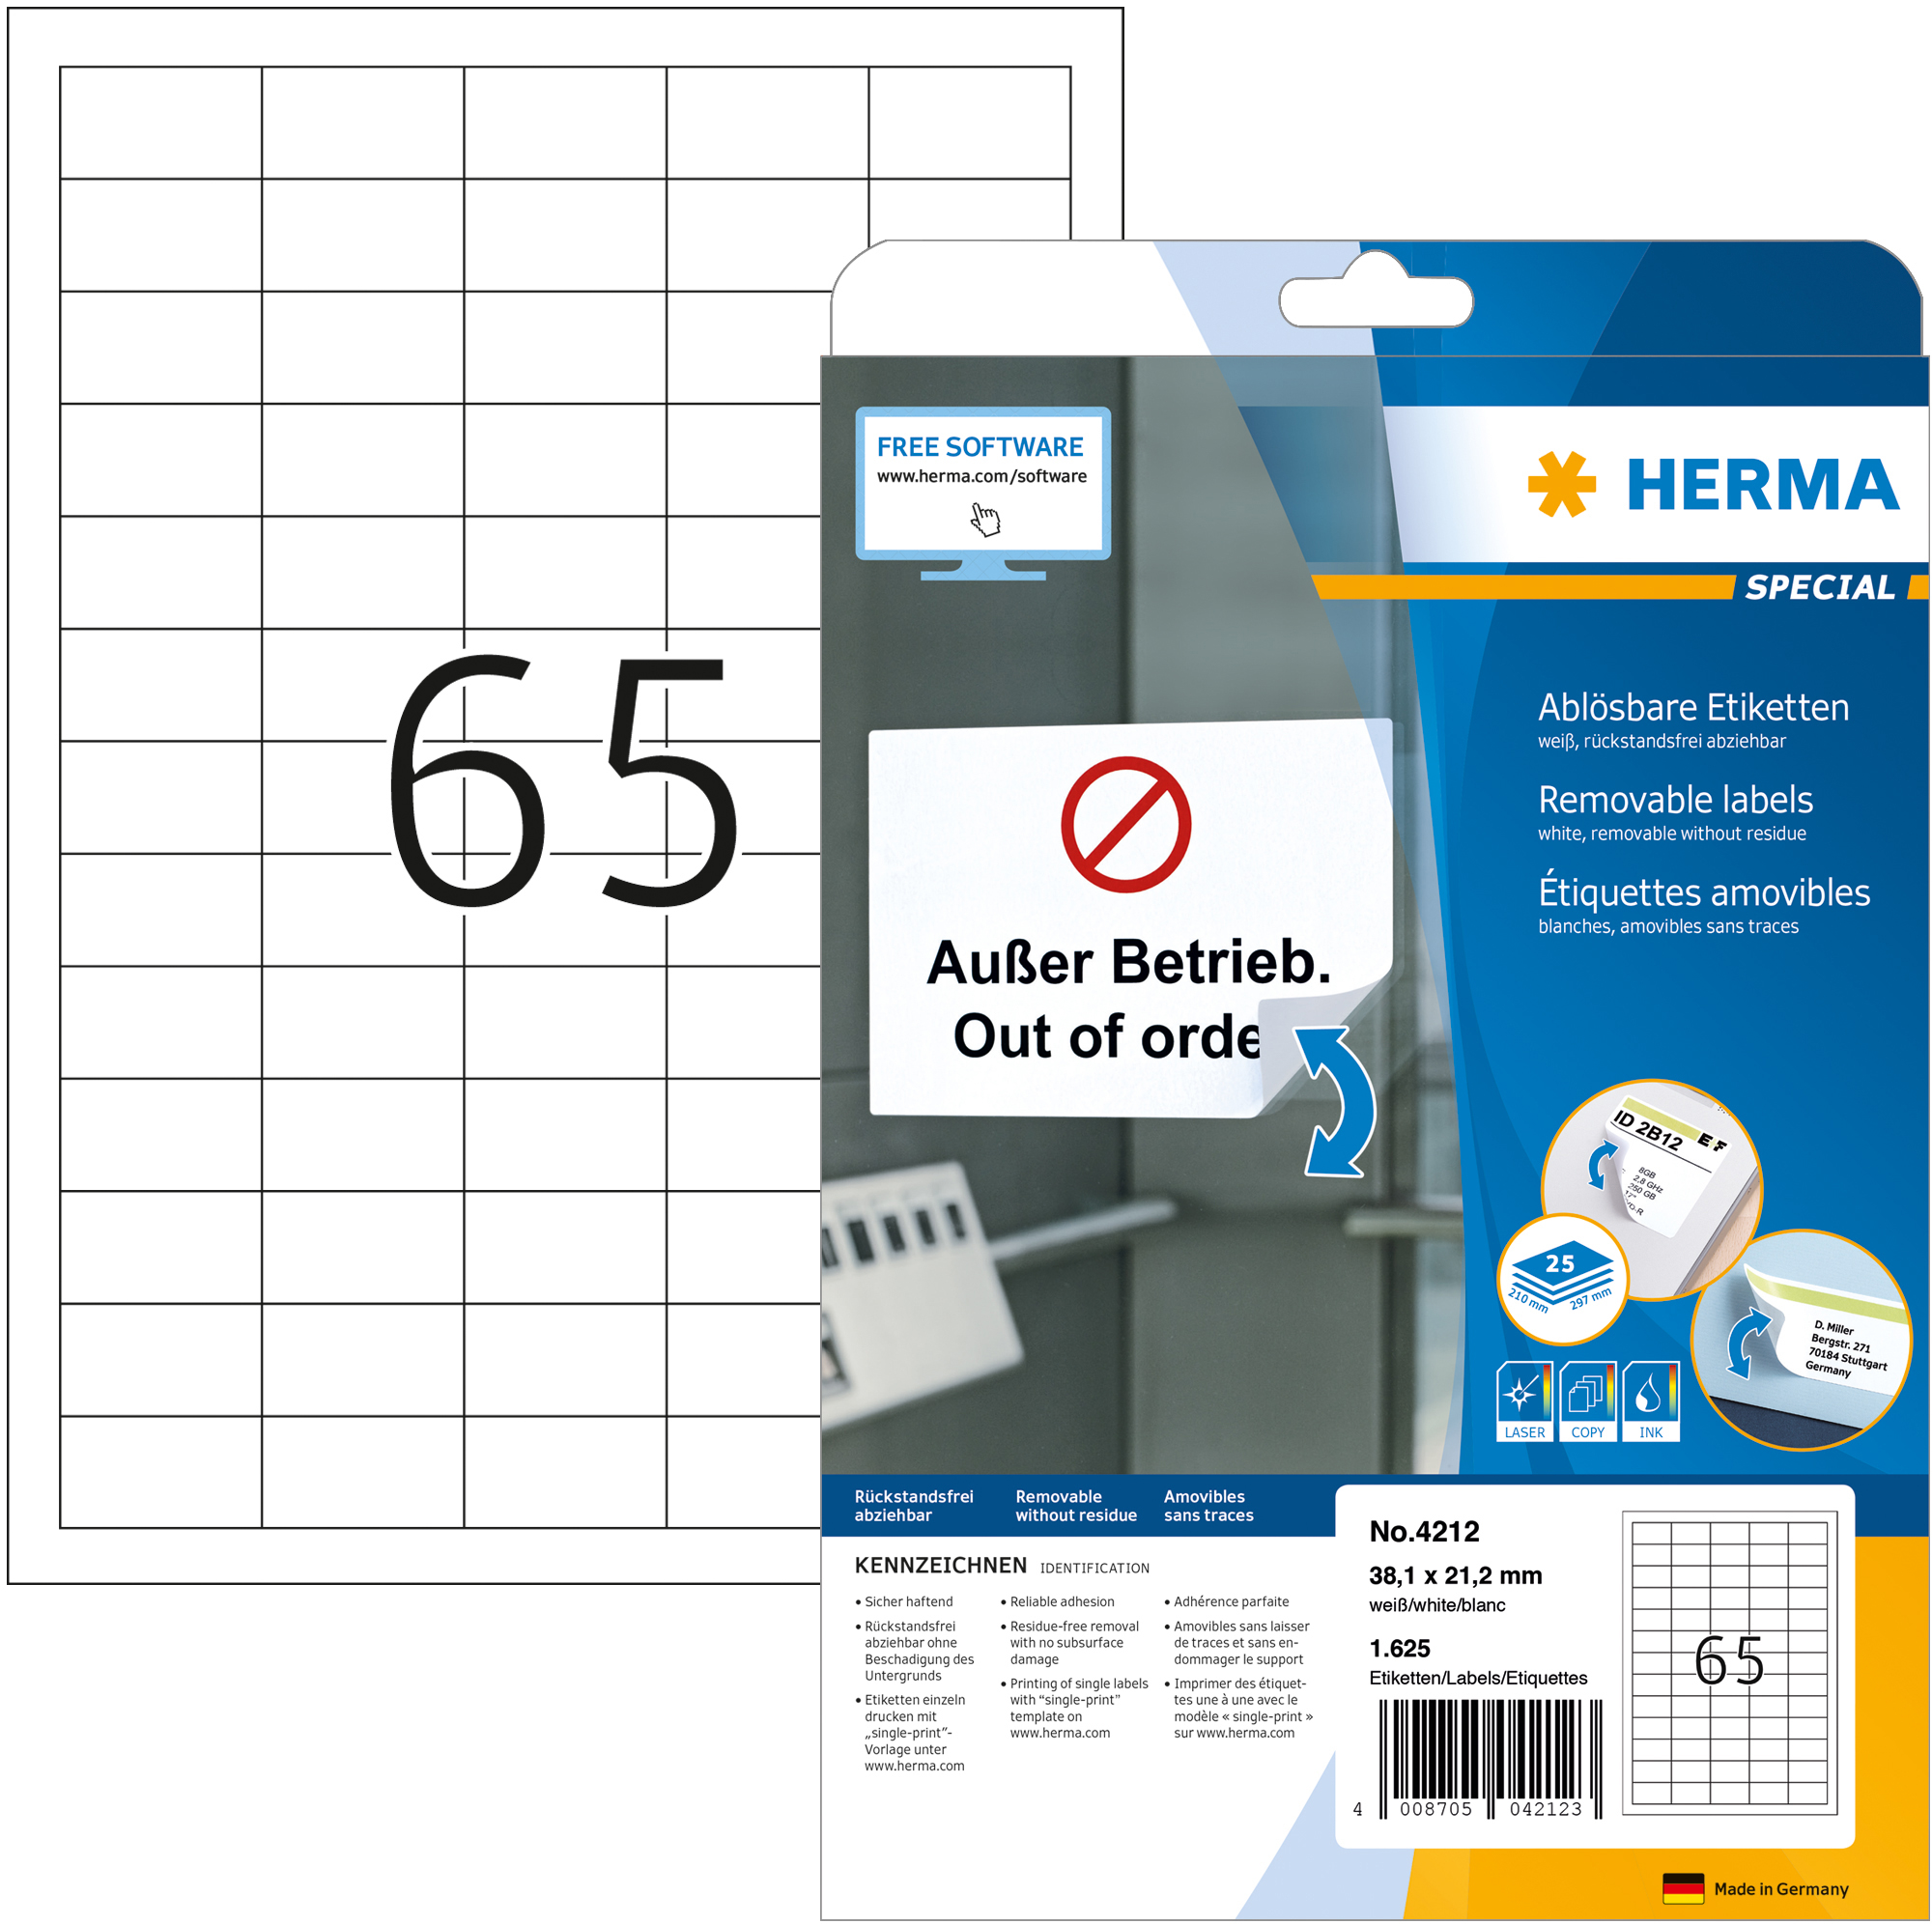 HERMA Etiquettes Special 38×21,2mm 4212 étiquettes prix 1625 pcs.